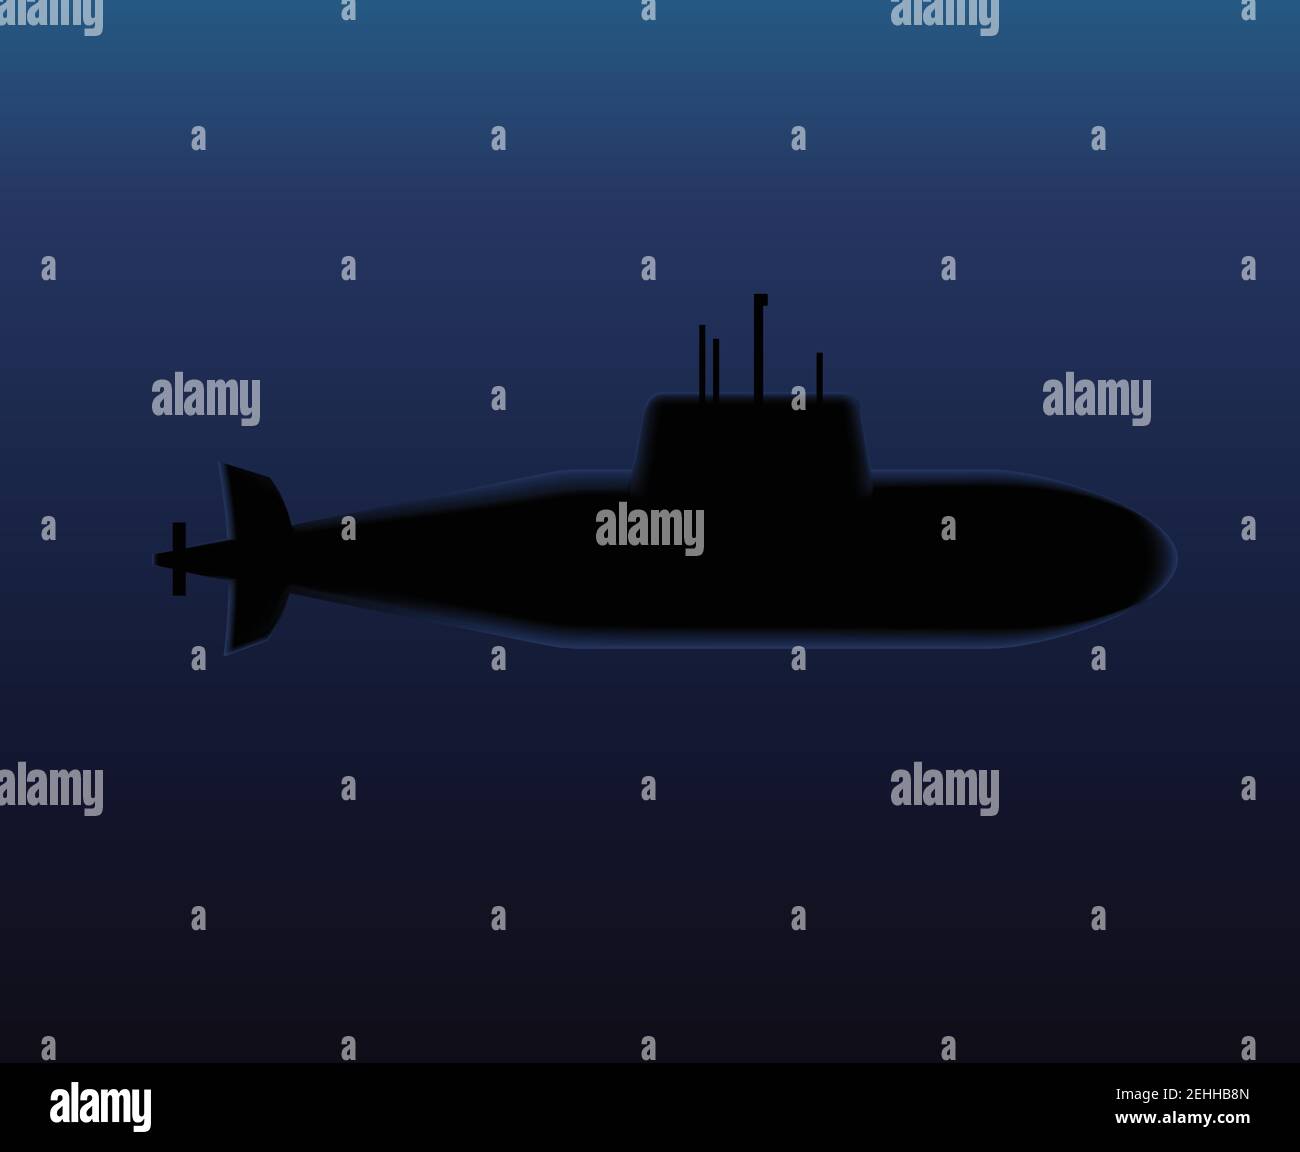 Military Submarine Diving In Dark Ocean Vector Illustration. Stock Vector